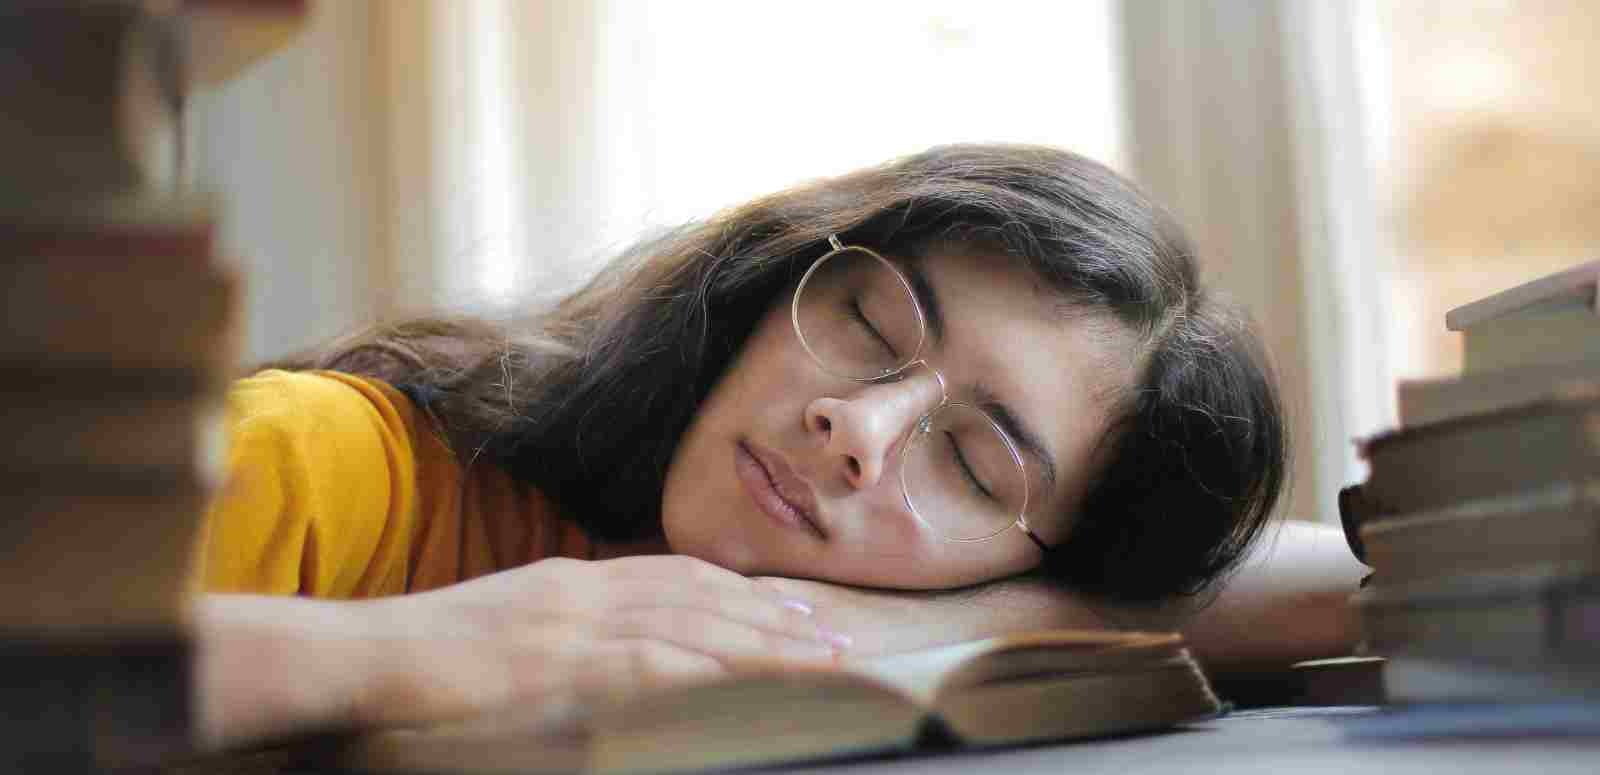 sleep quality and effect on overall health